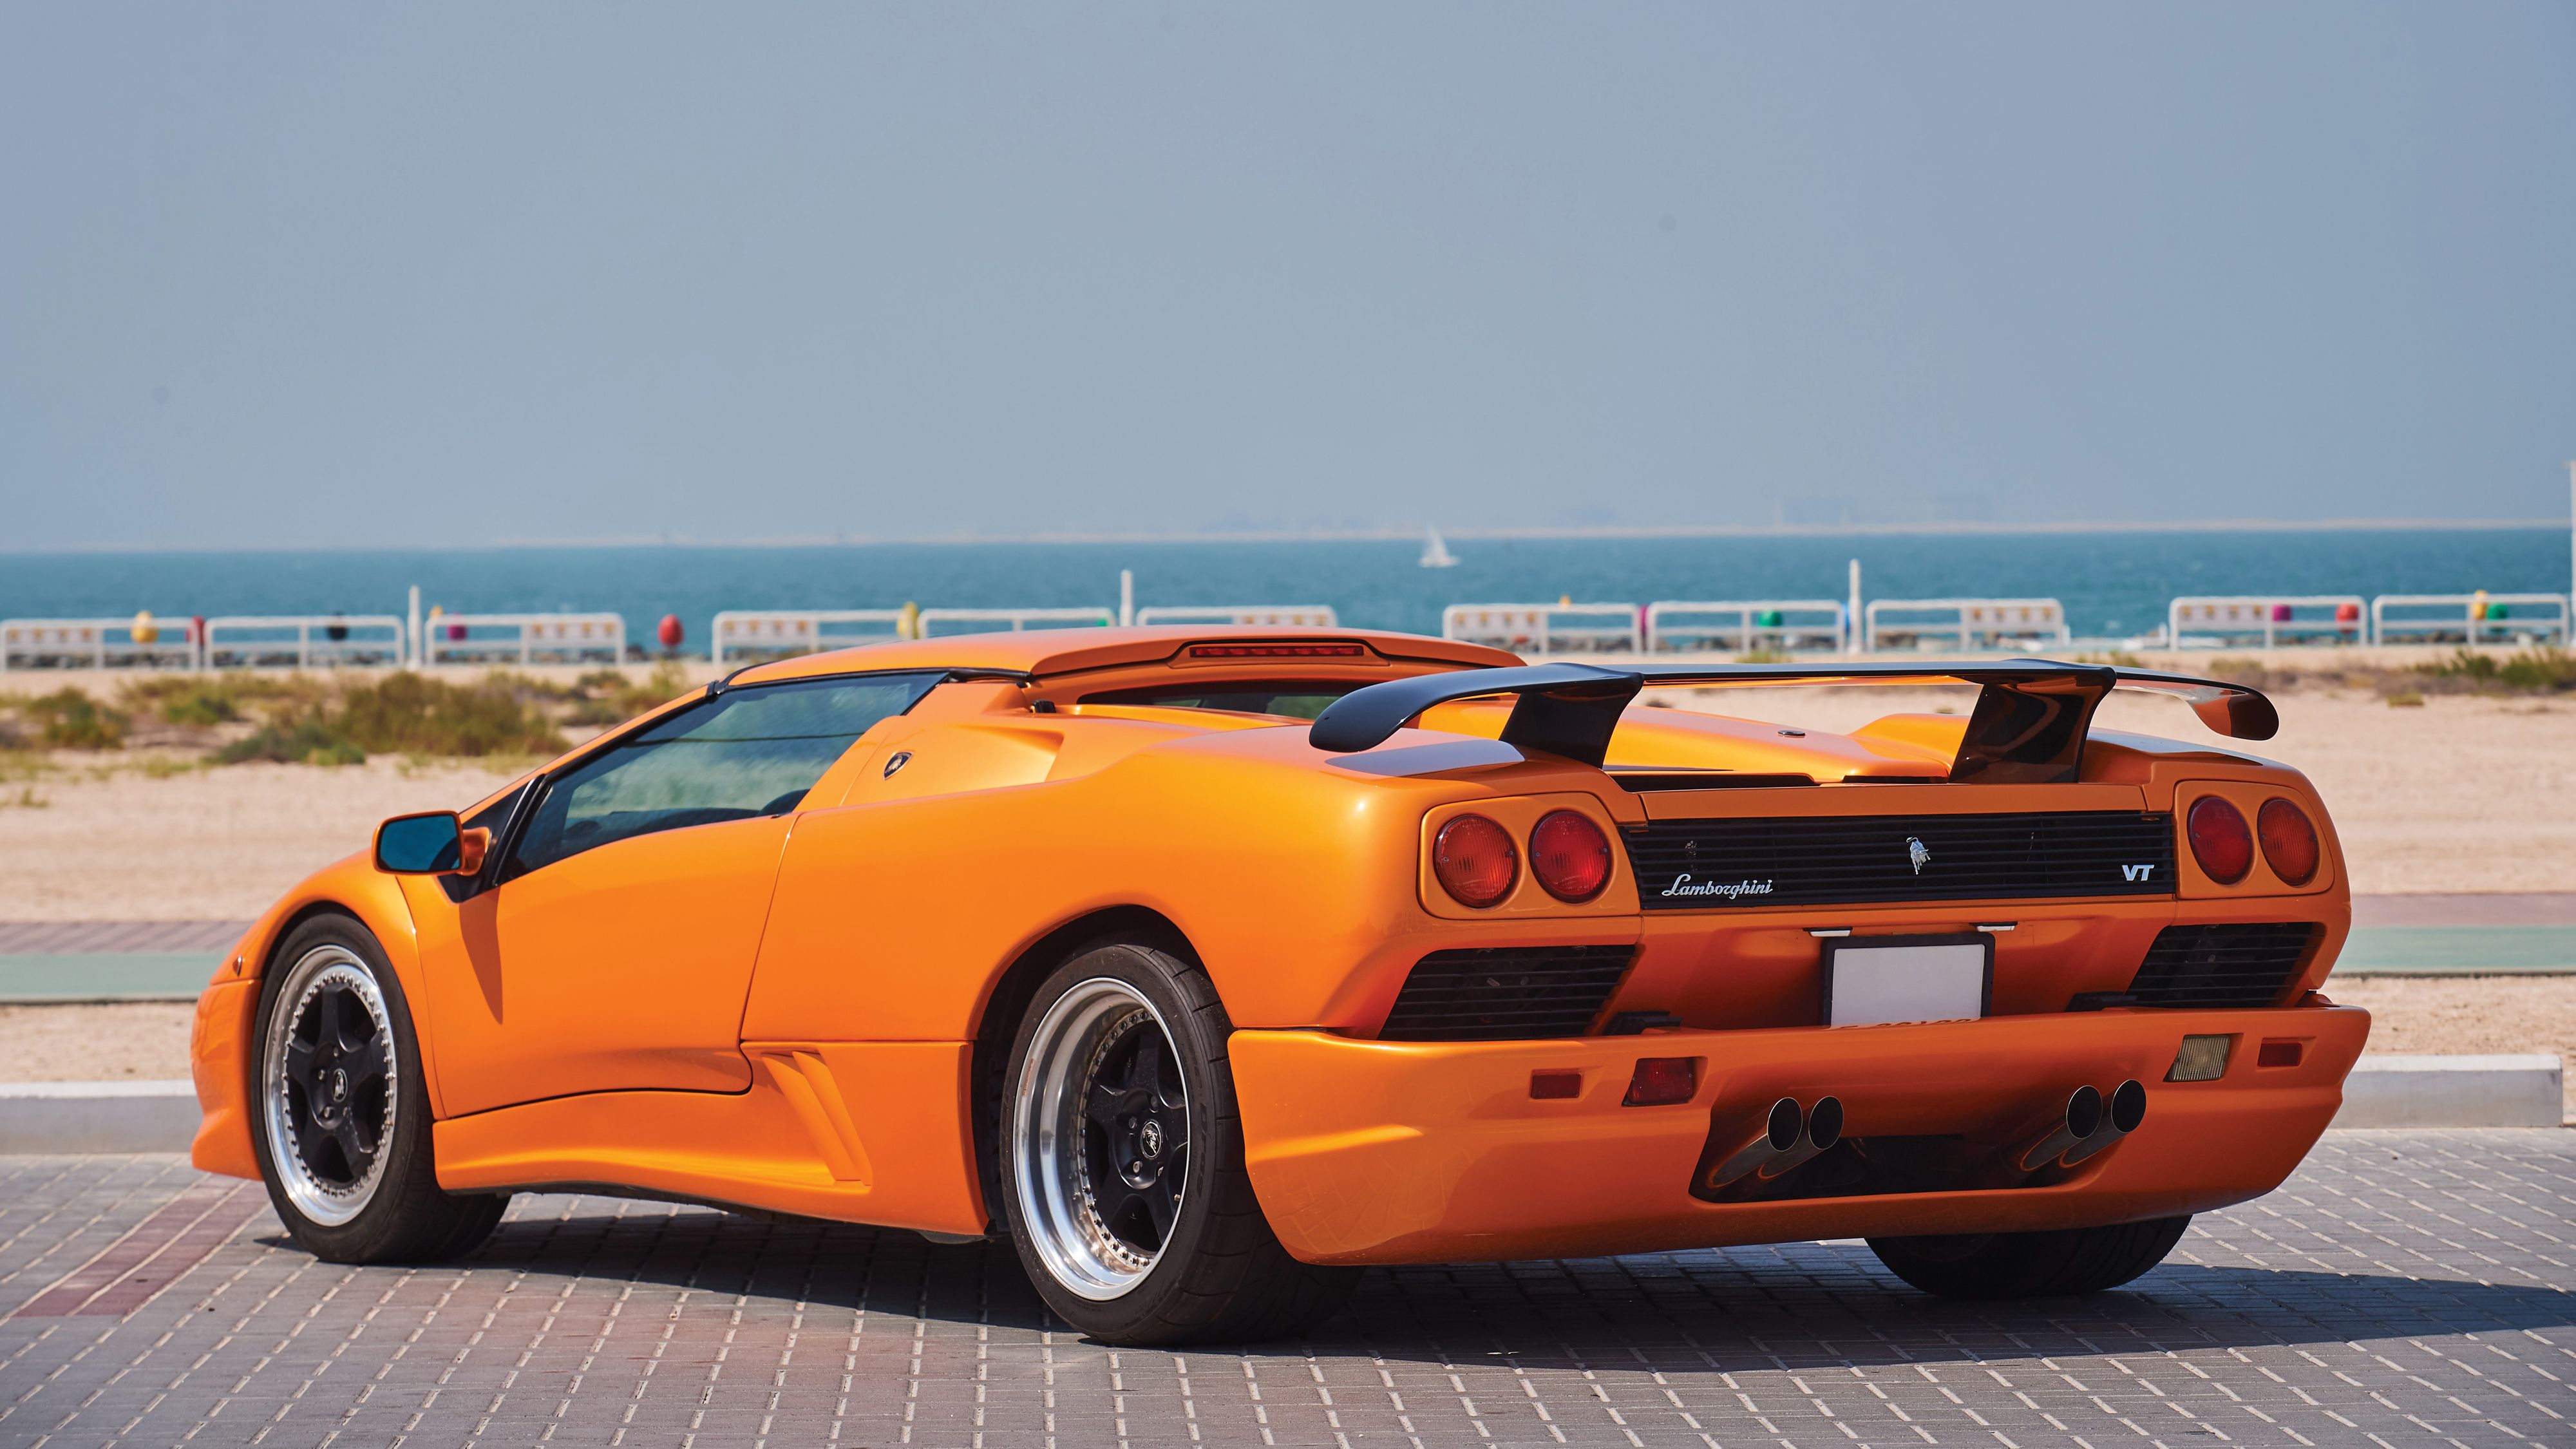 Lamborghini Lamborghini Diablo Super Car Italian Cars Roadster Orange Vehicle Car Orange Cars 4000x2250